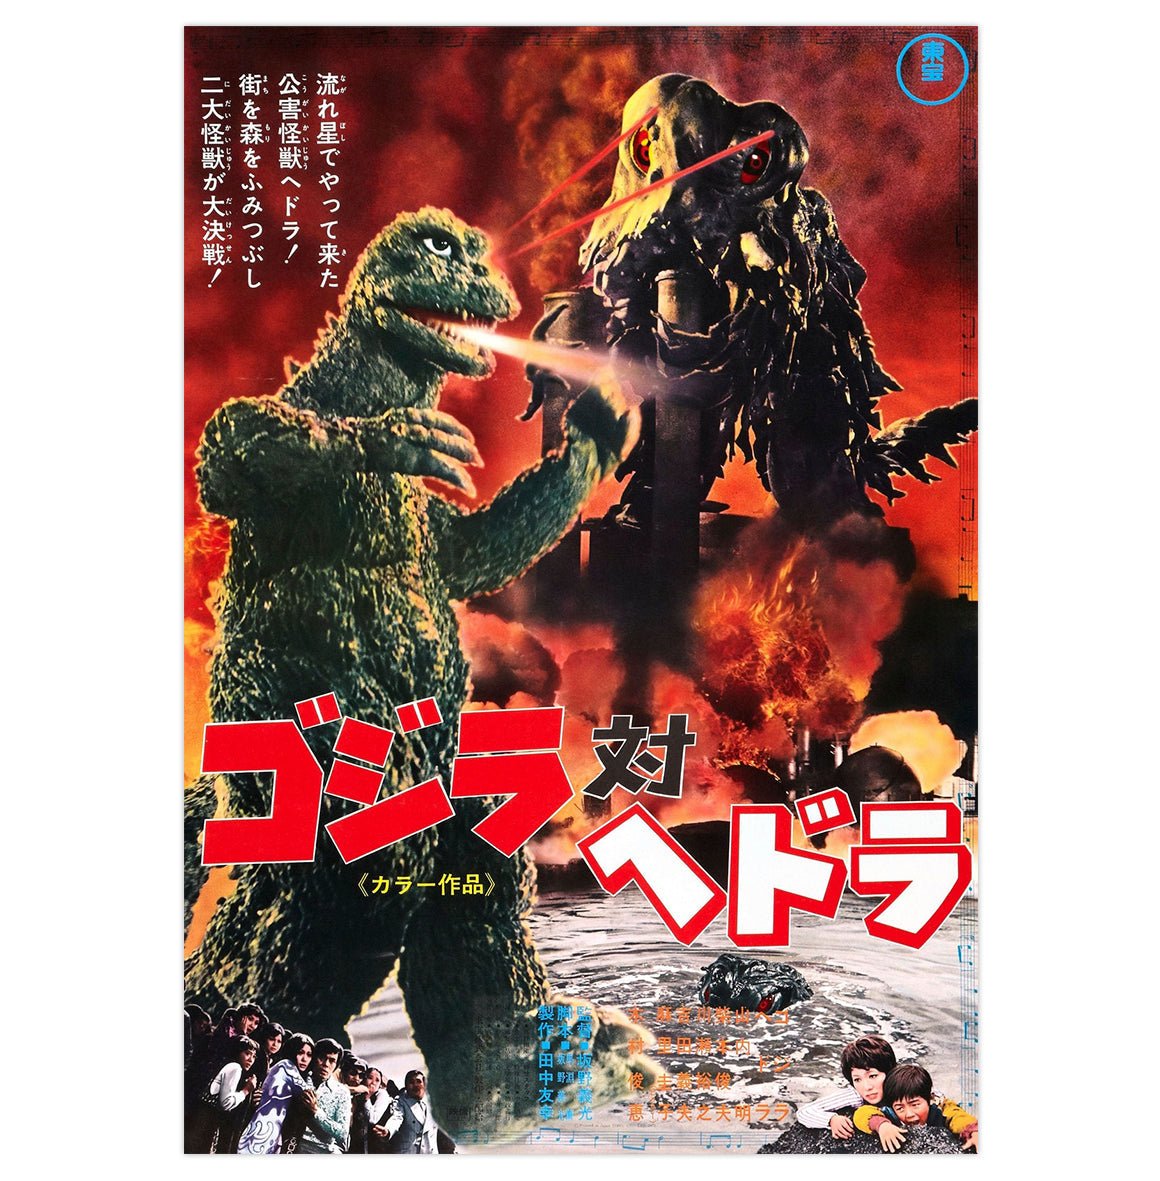 Mini poster adhesivo y reposicionable: Godzilla - Tienda Pasquín